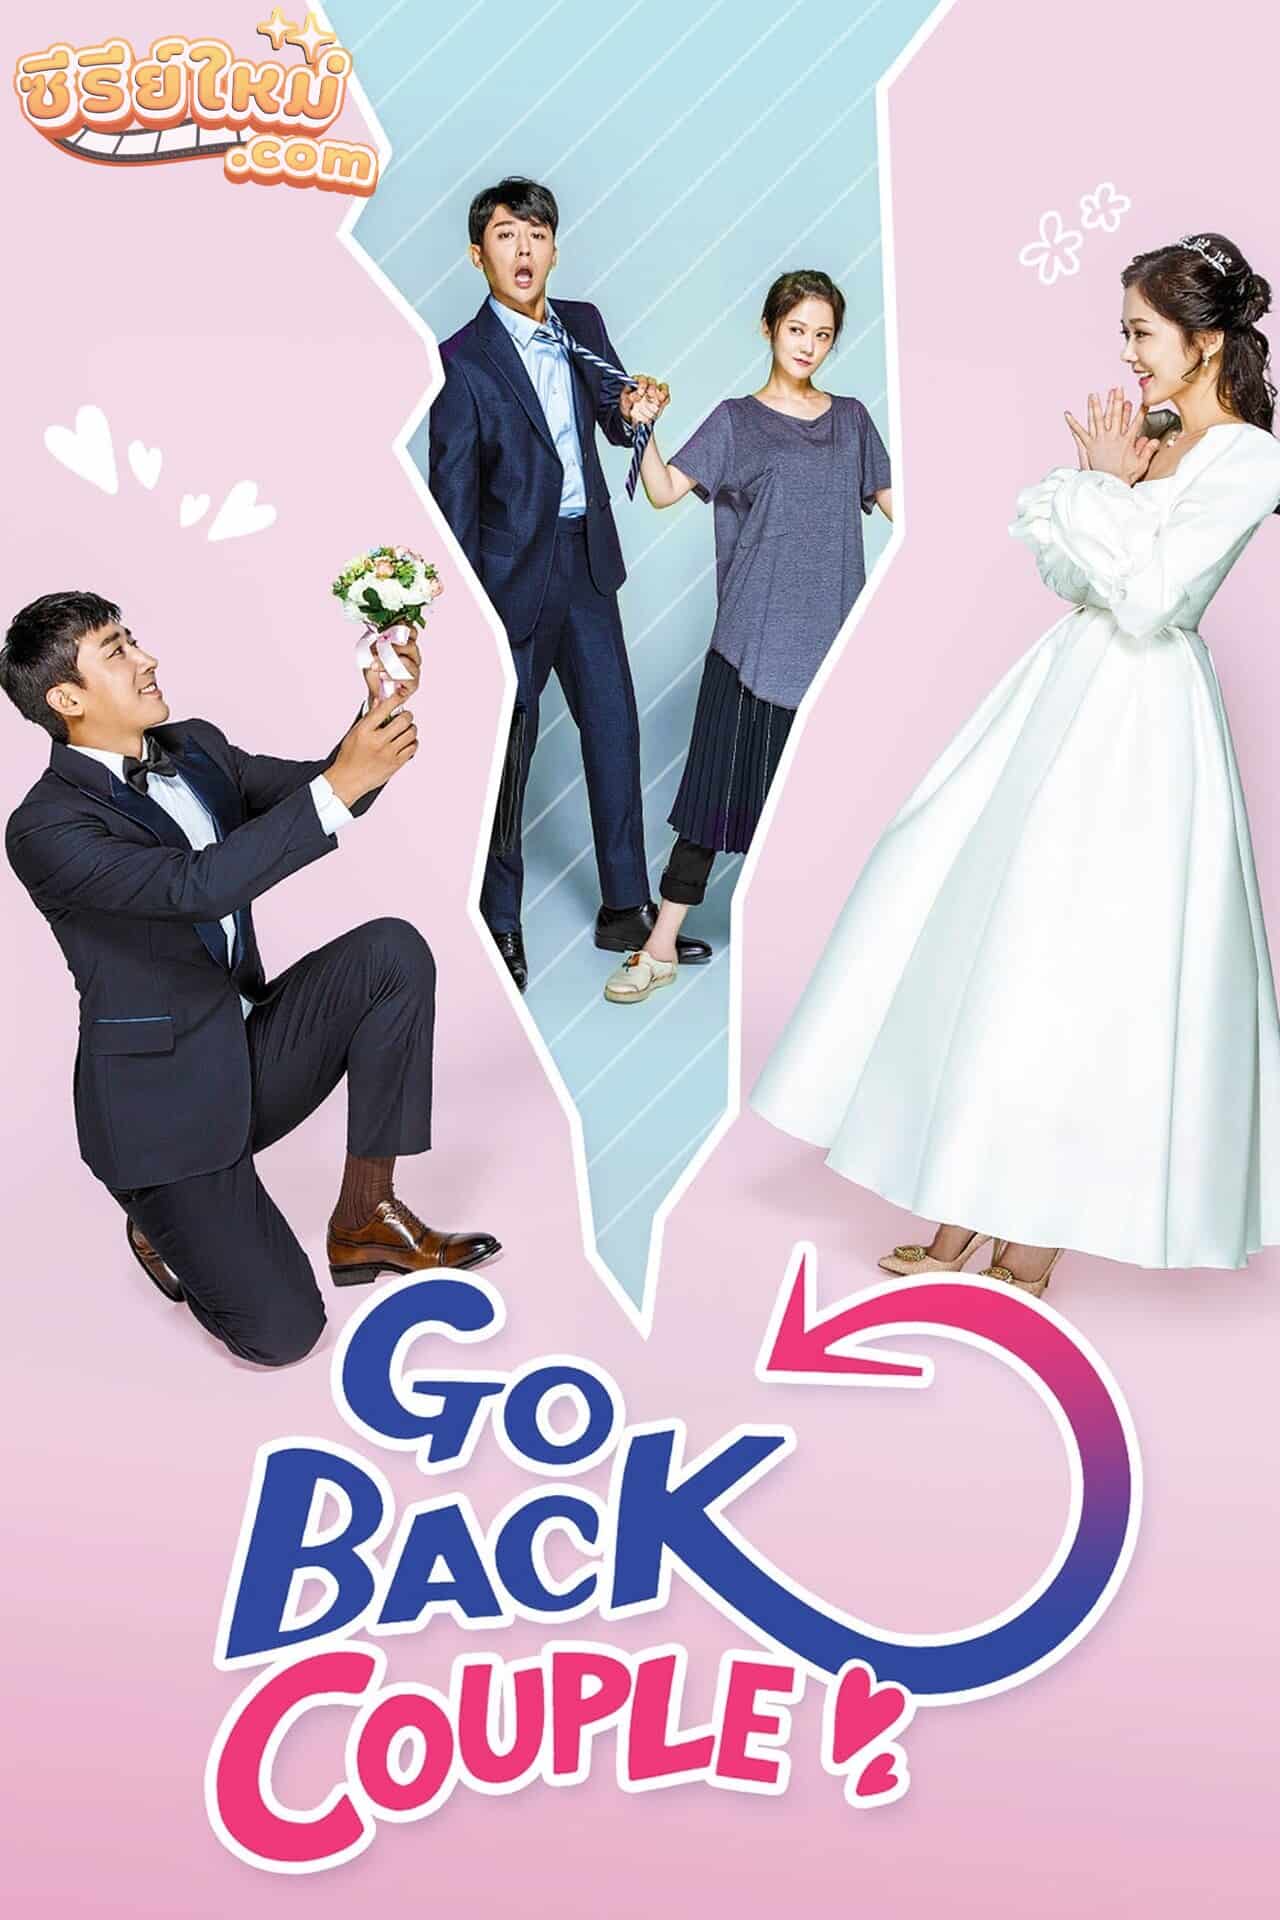 Go Back Couple ย้อนวัย ใจพบรัก (2017)